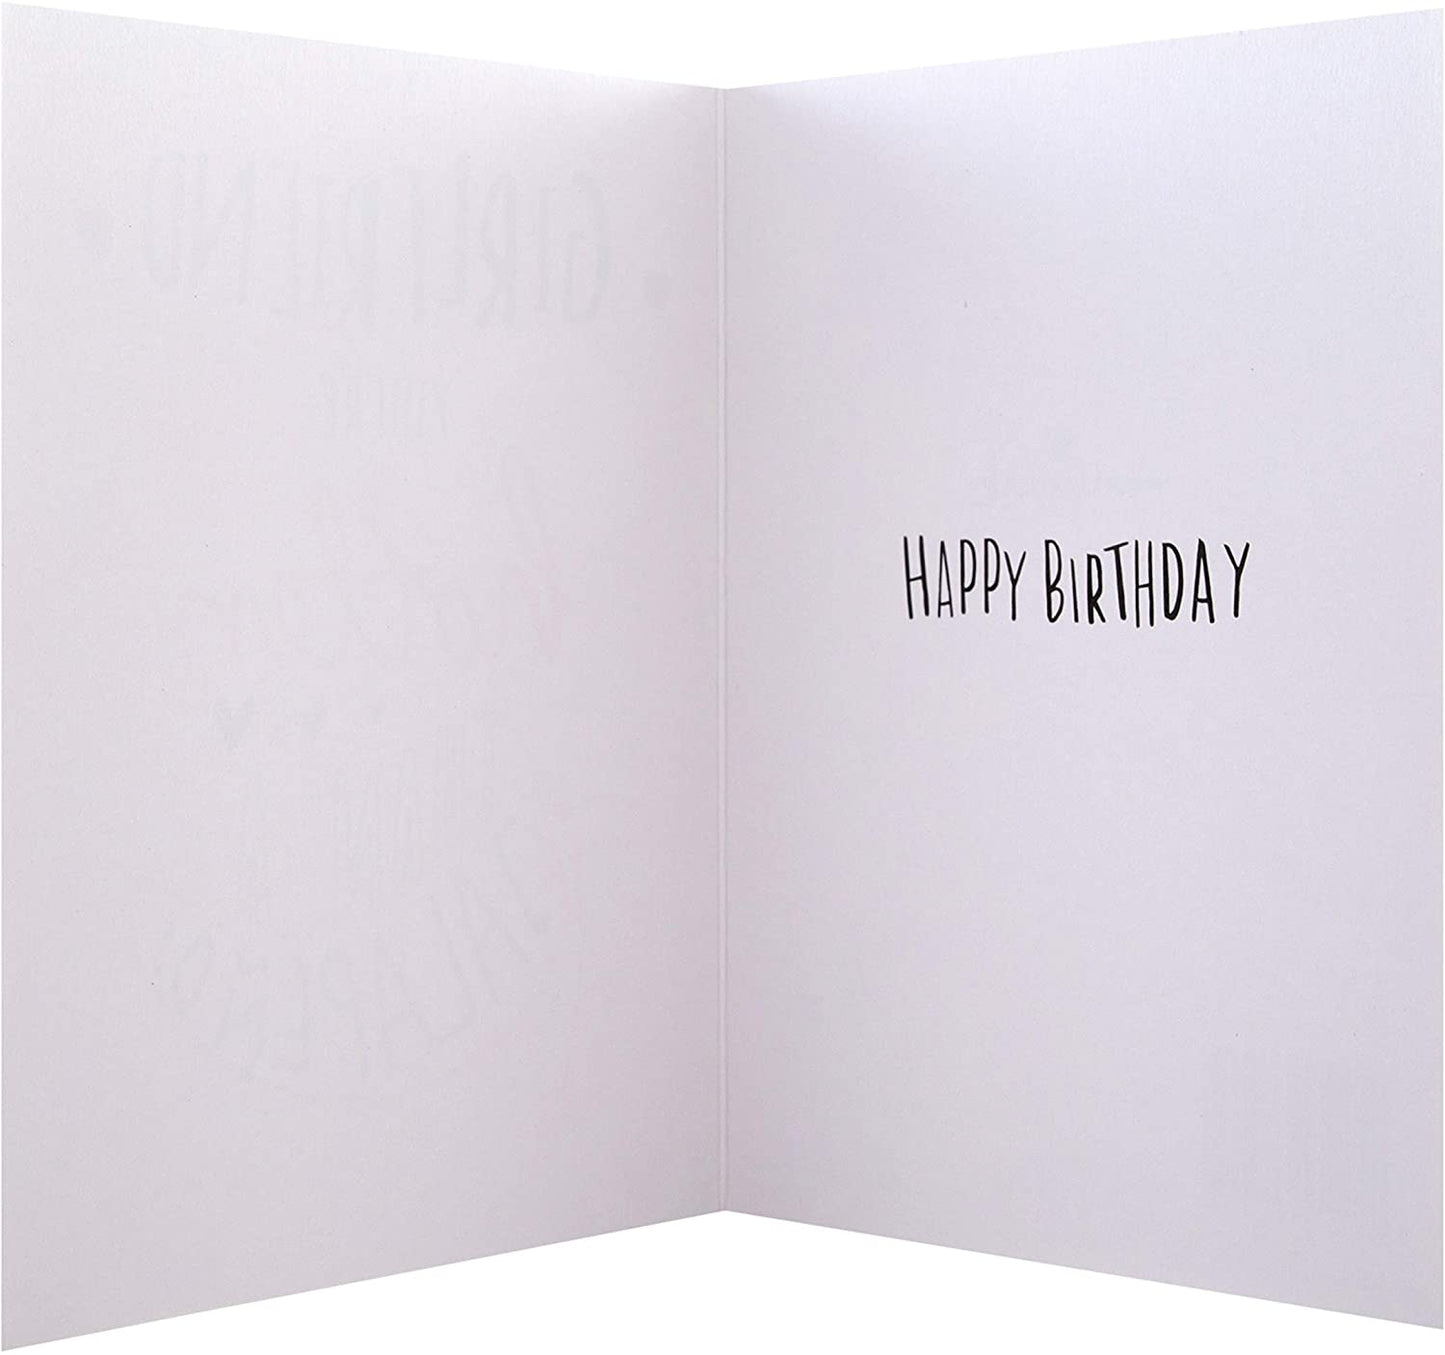 Contemporary Text Based Design Girlfriend Birthday Card